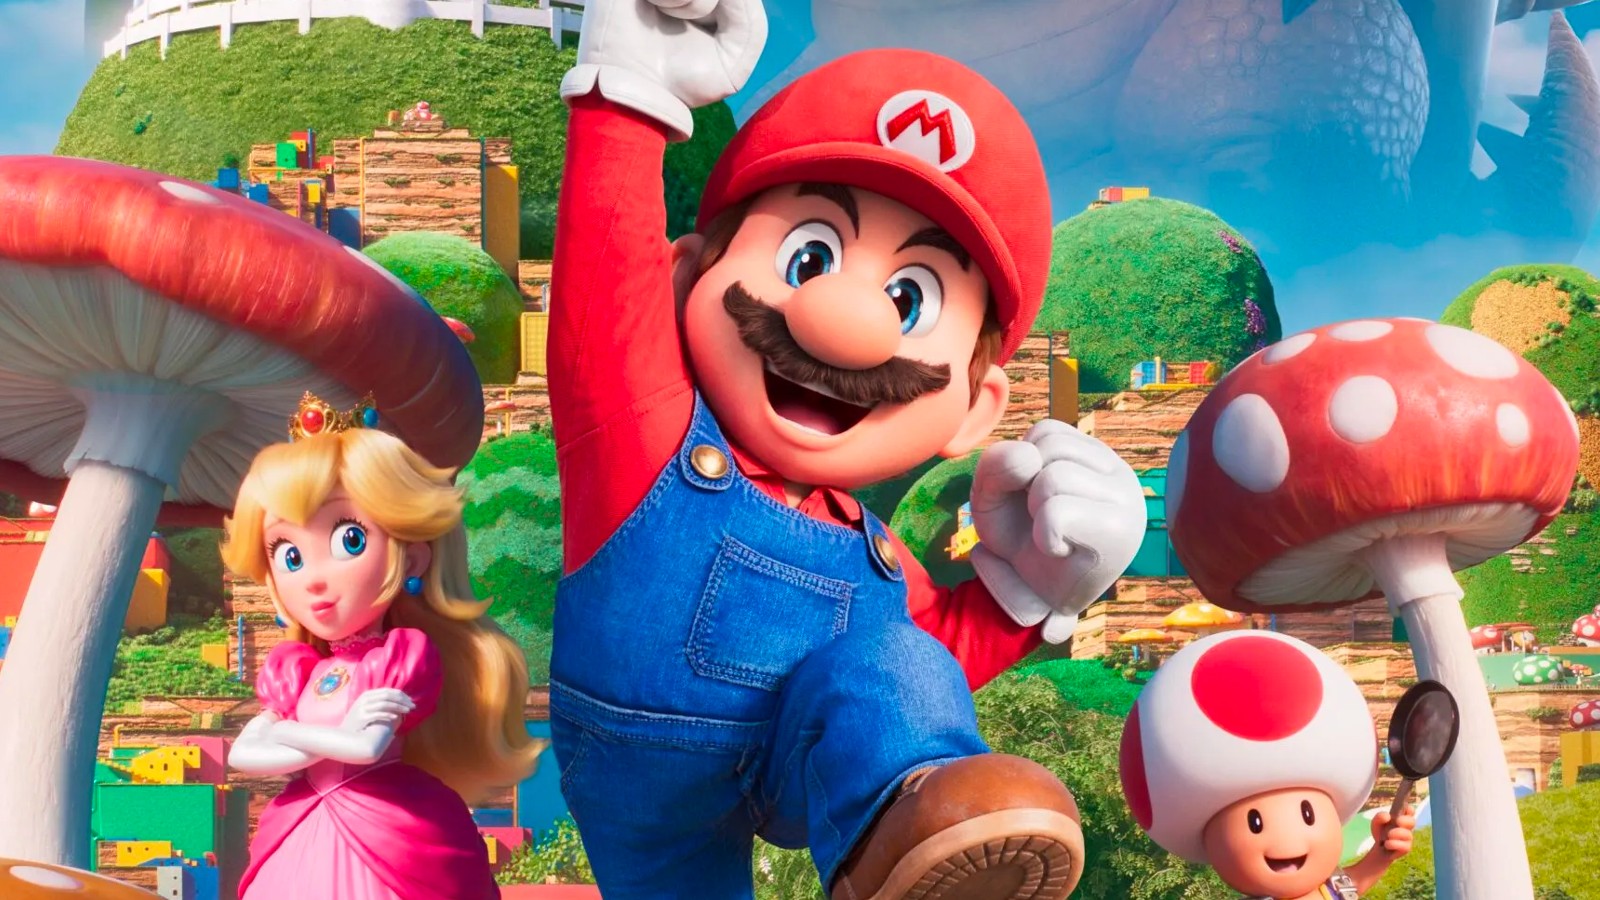 Super Mario Bros. Wonder puts a fresh spin on the Mario formula — and it  rocks